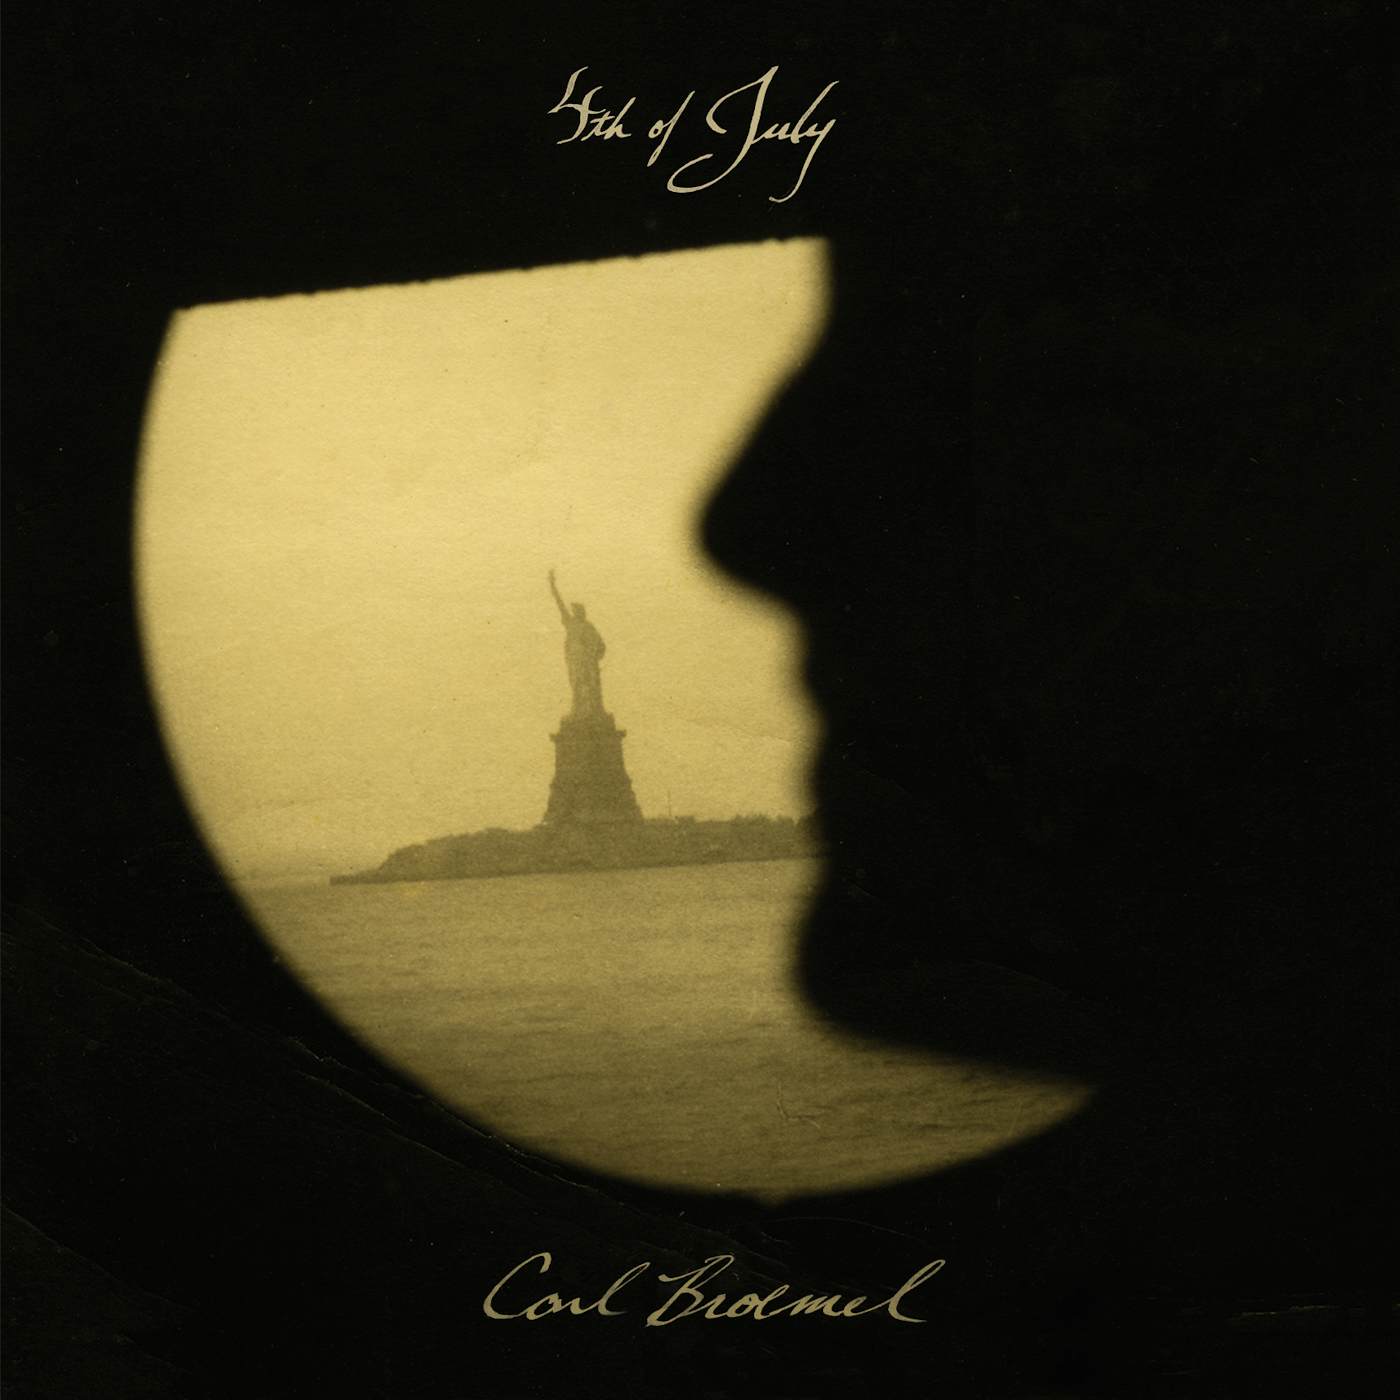 Carl Broemel 4TH OF JULY CD